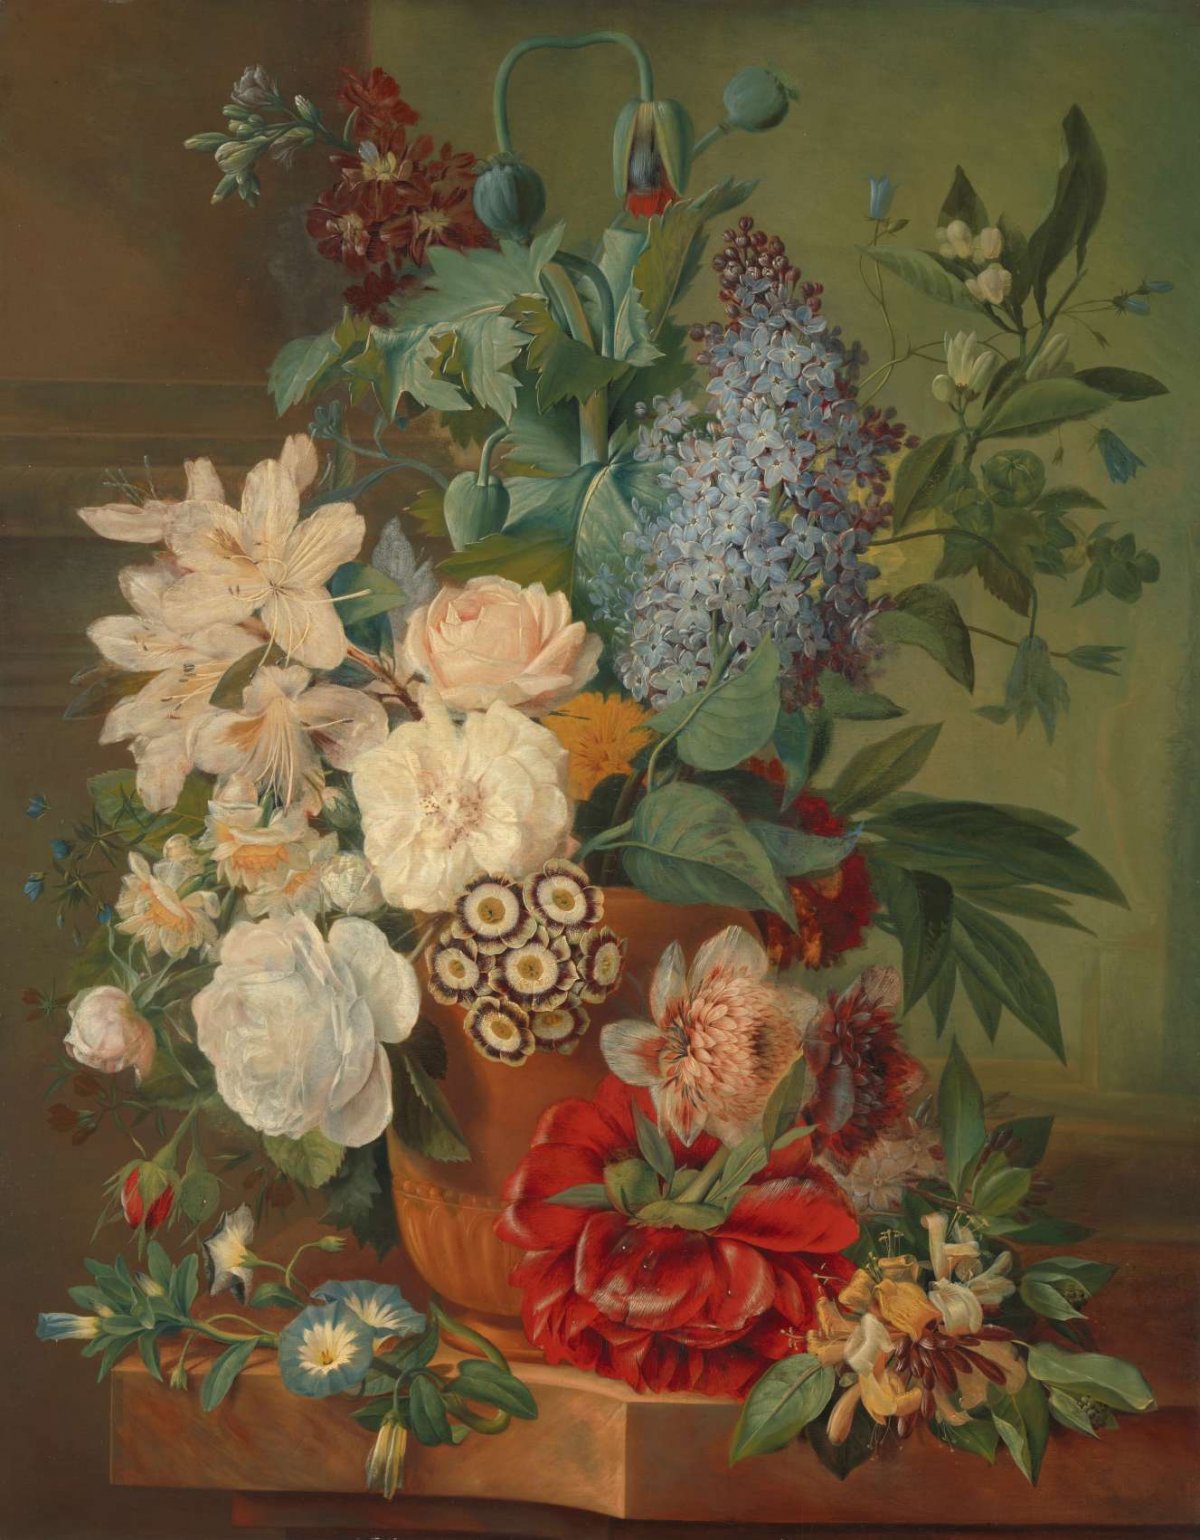 Flowers in a Terra Cotta Vase, Albertus Jonas Brandt, 1810 - 1824